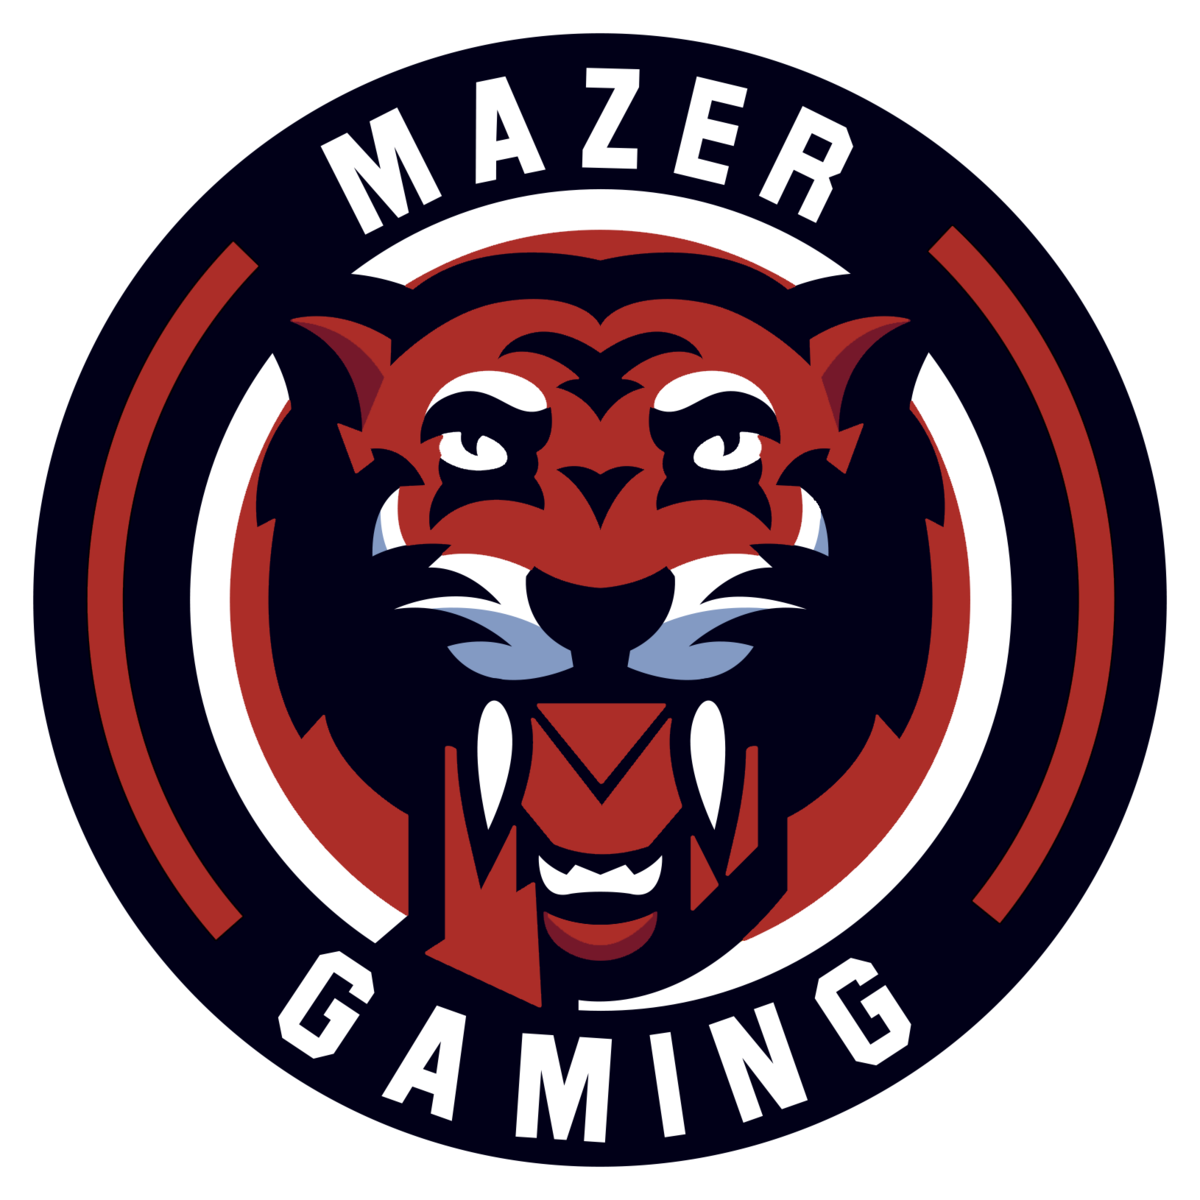 1200px-Mazer_Gaminglogo_square.png